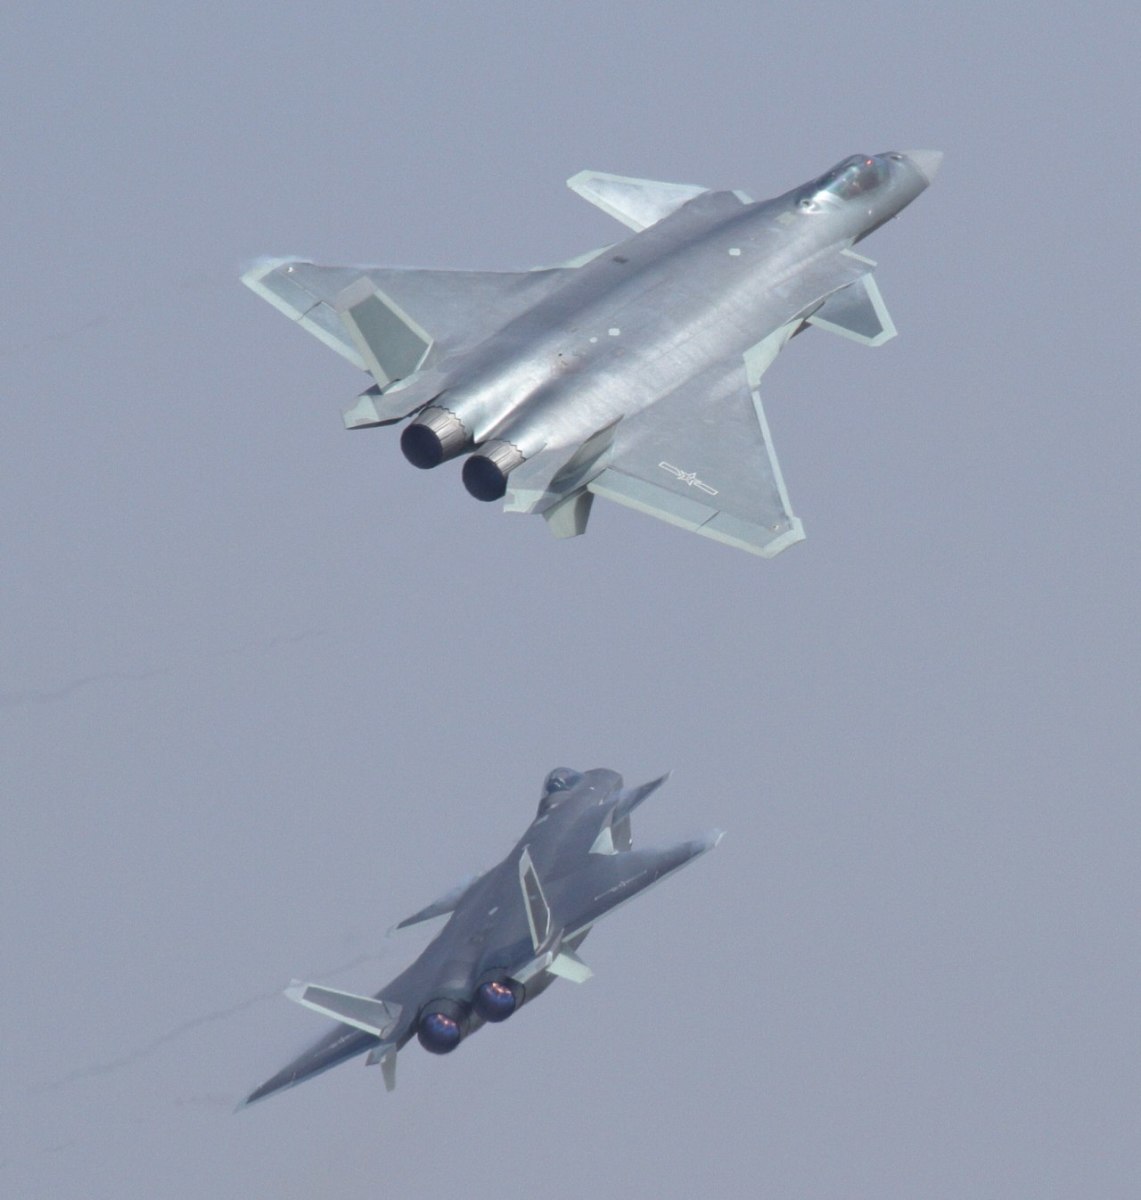 Two Chengdu J-20s